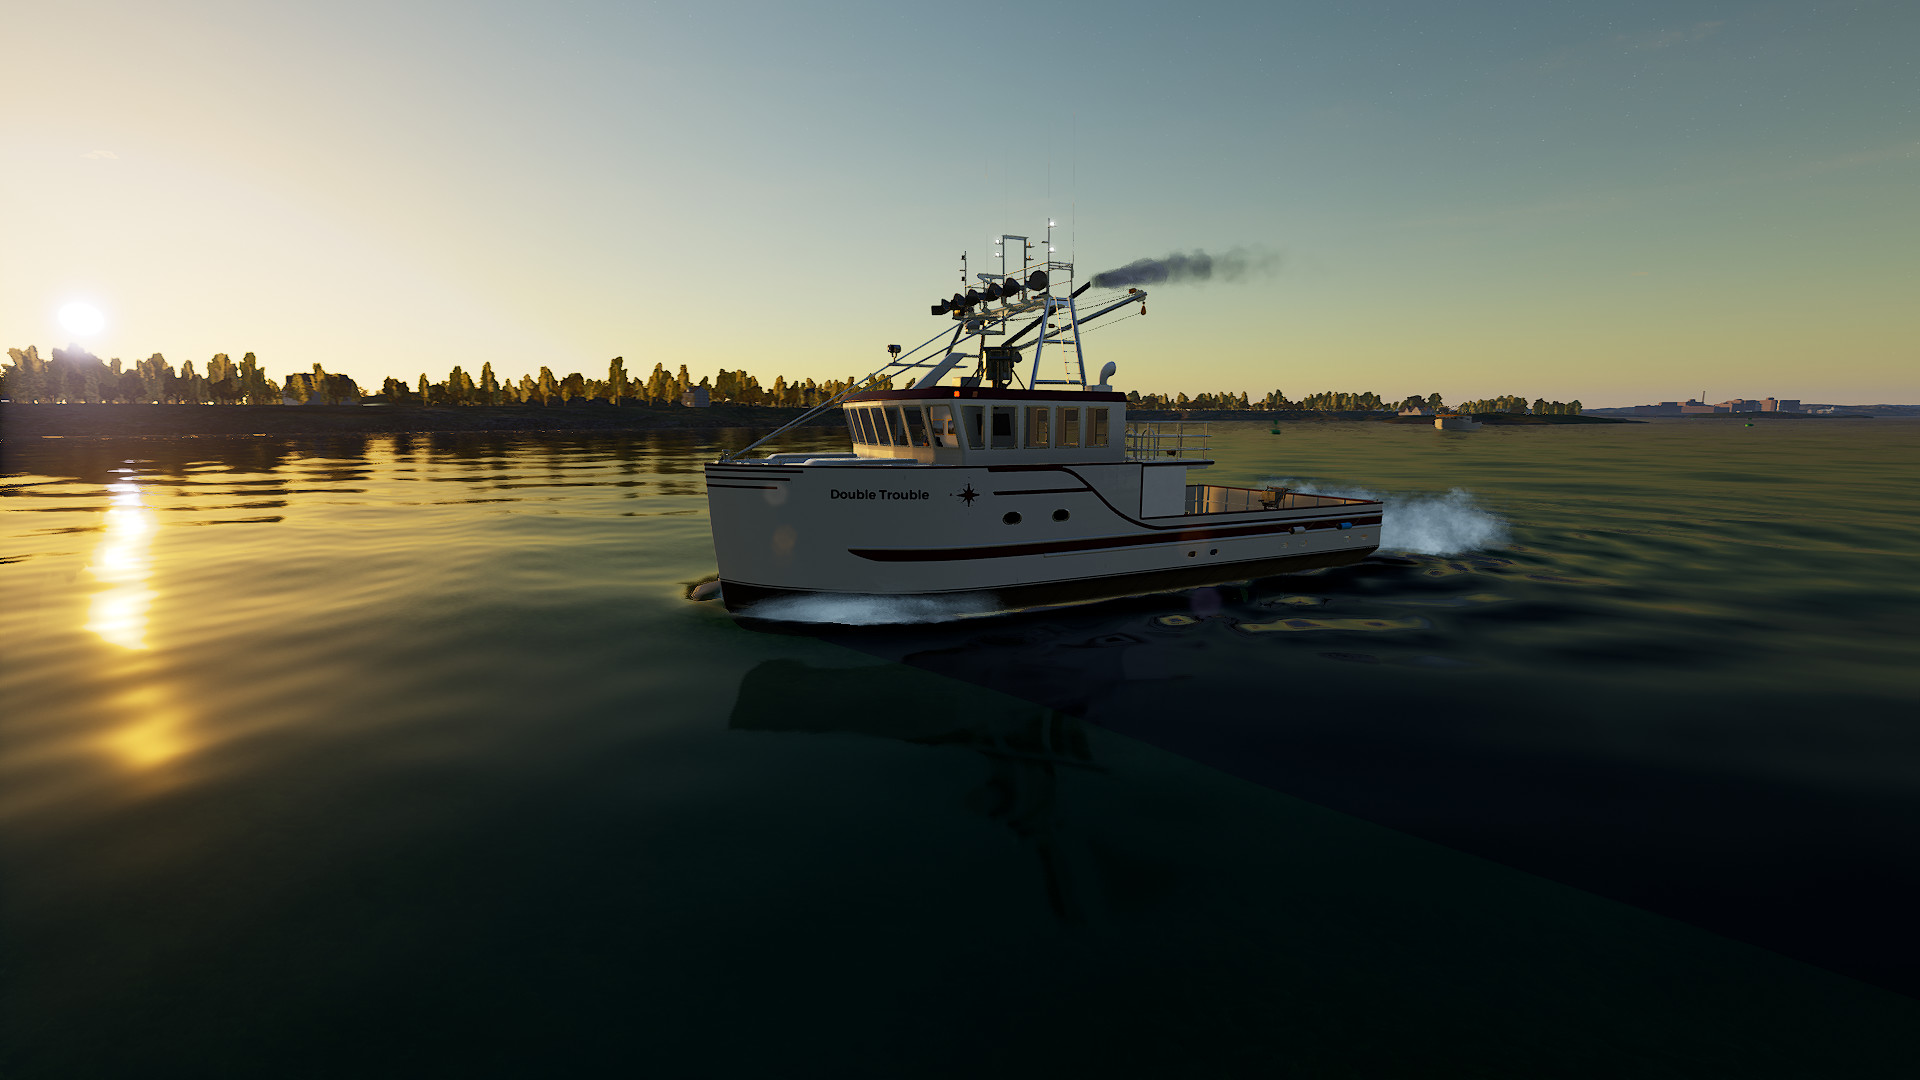 Fishing: North Atlantic screenshot